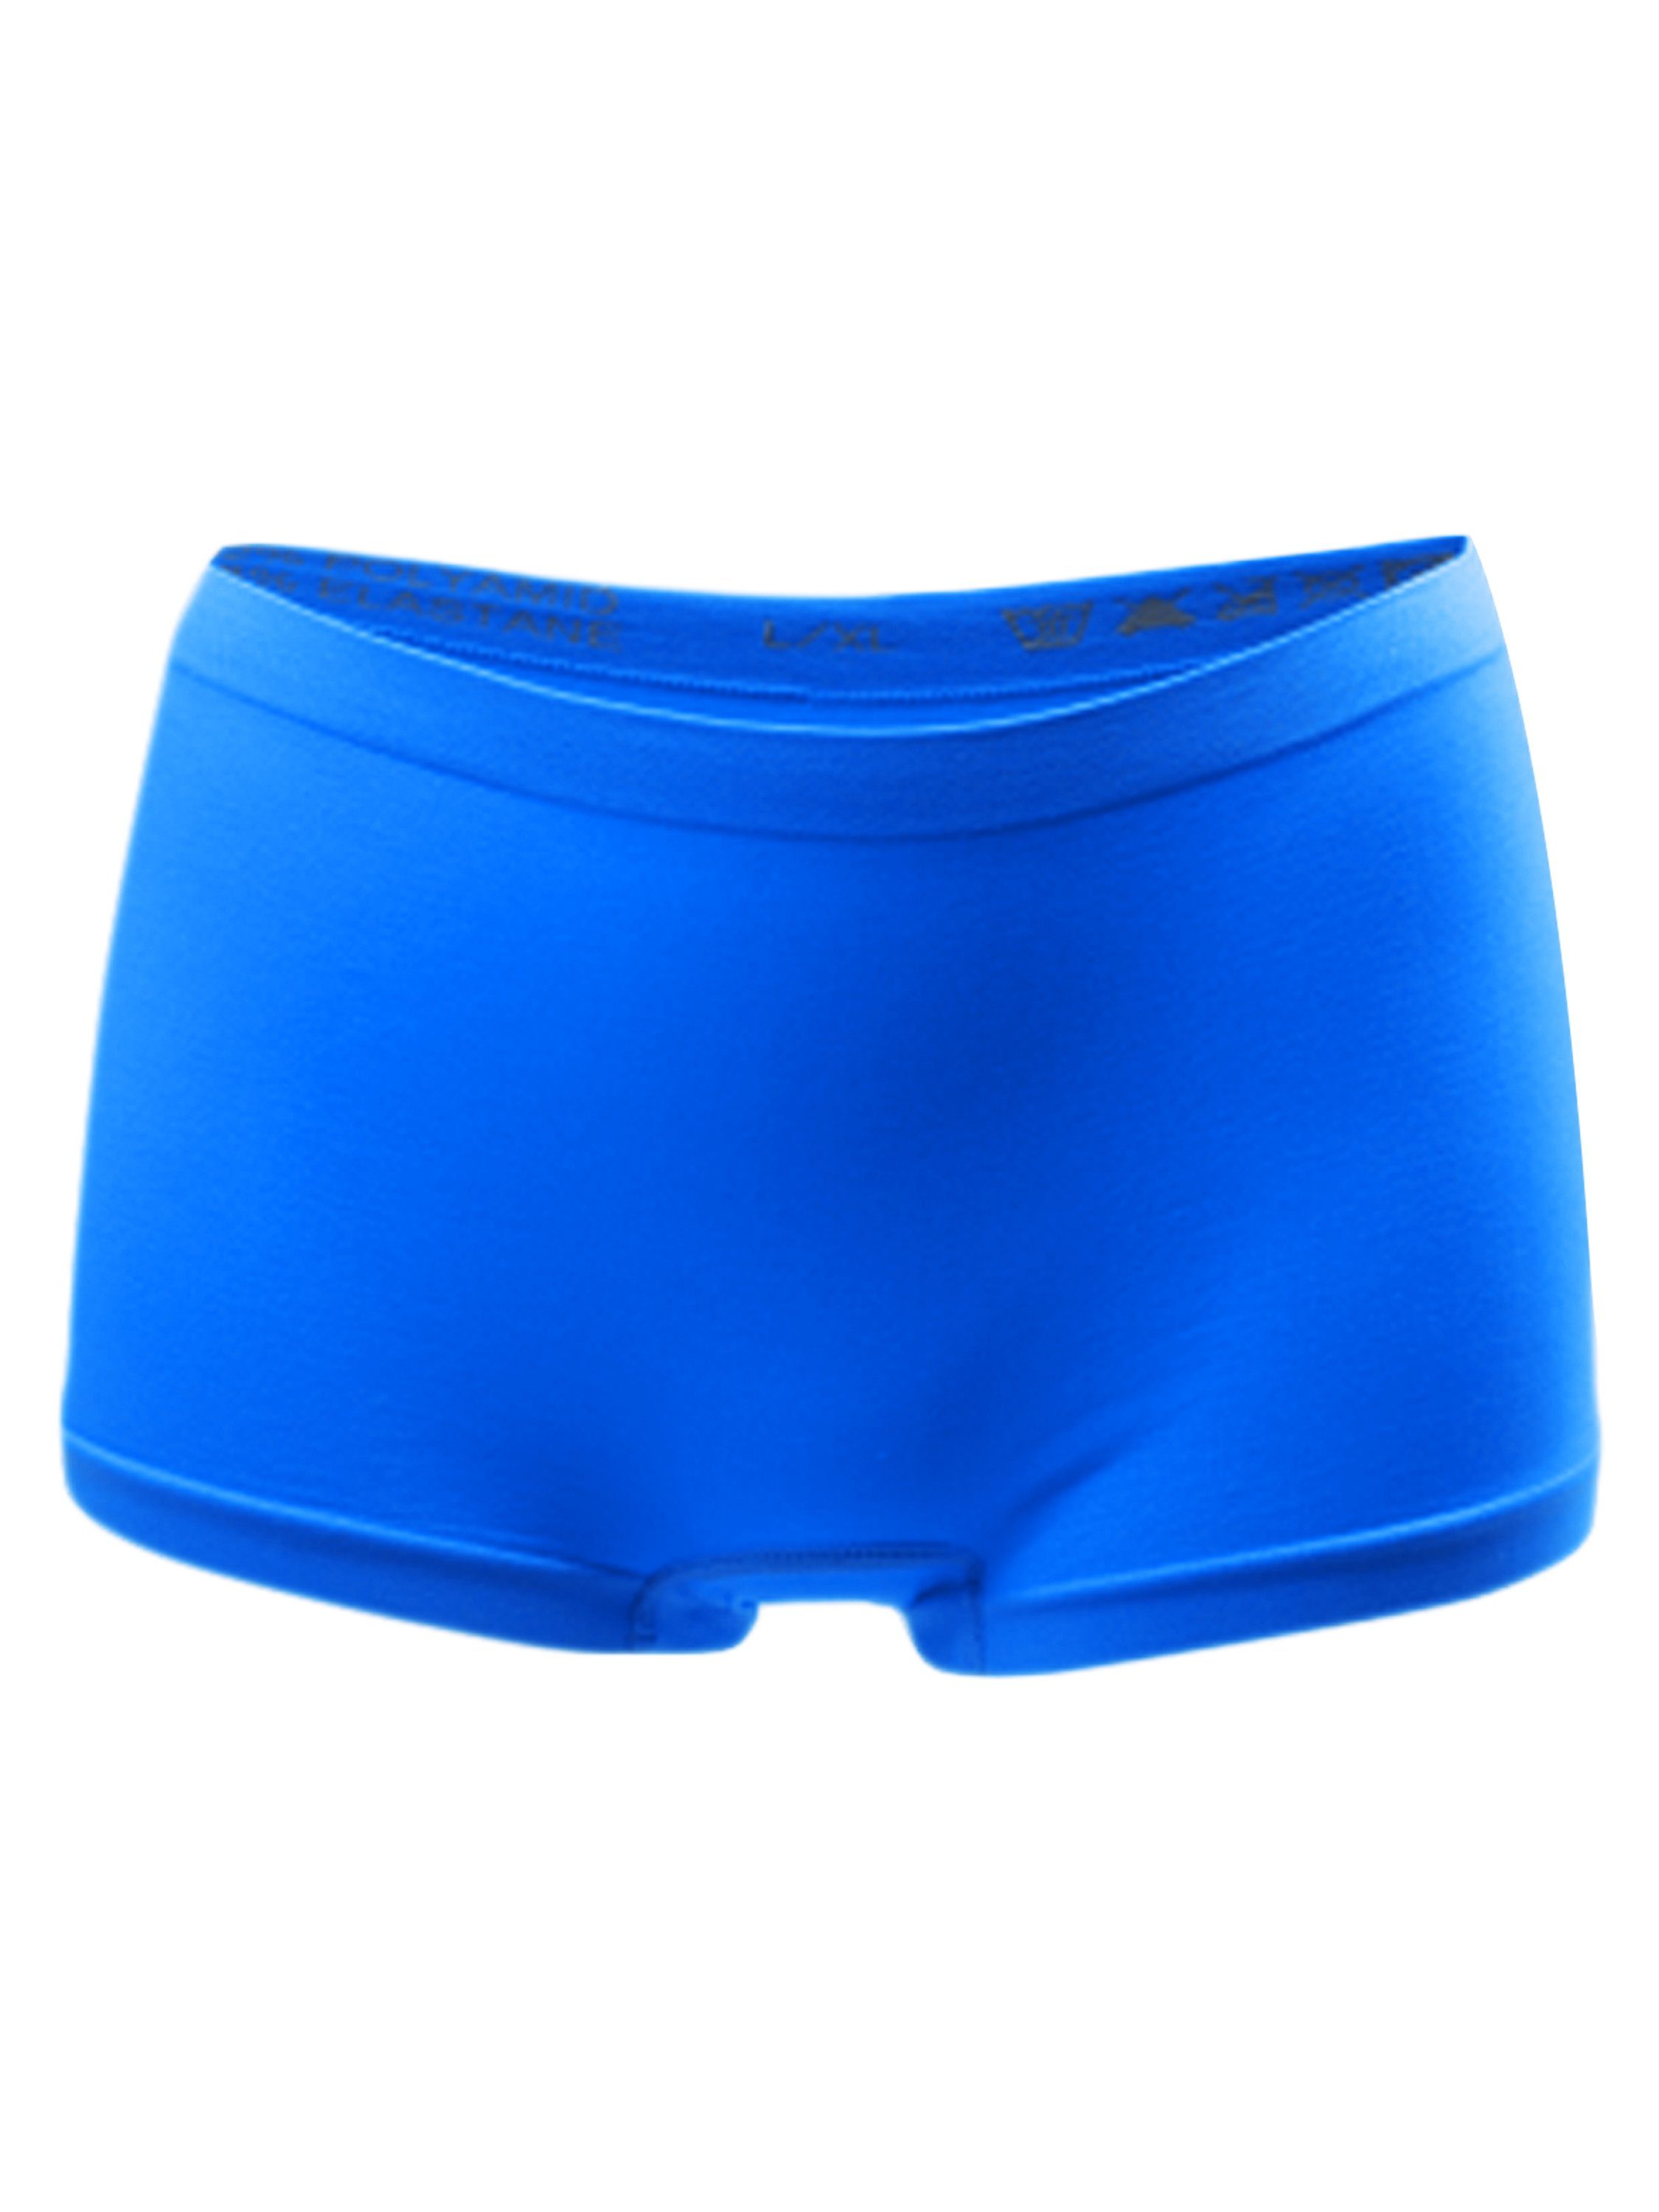 TEXEMP Panty 8er Pack Damen Slips Slip L/XL Schlüpfer (Spar-Pack, Microfaser S/M Hotpants Panty Panties Unterwäsche 8er-Pack)